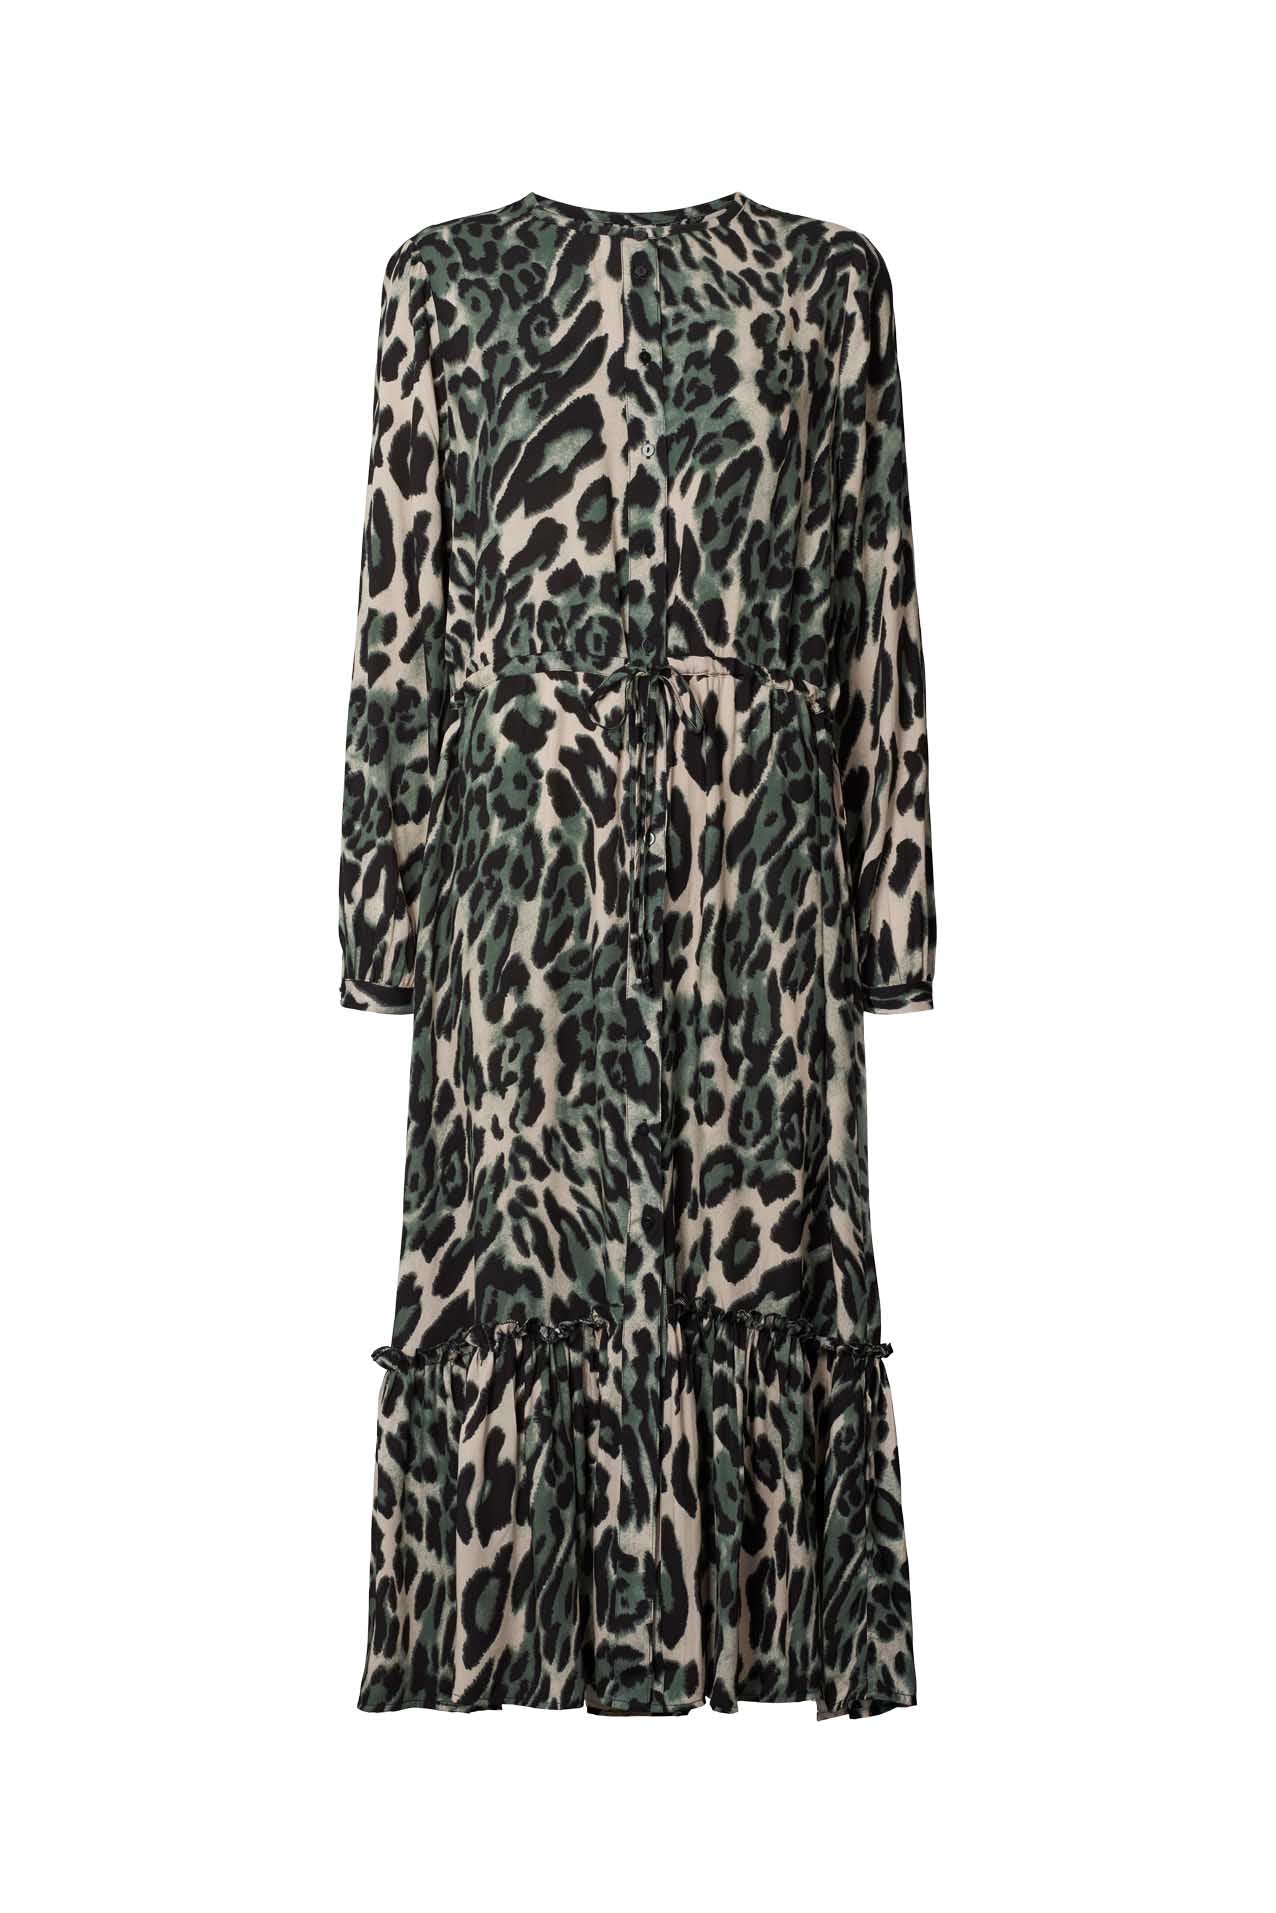 Anastacia Dress | Leopard